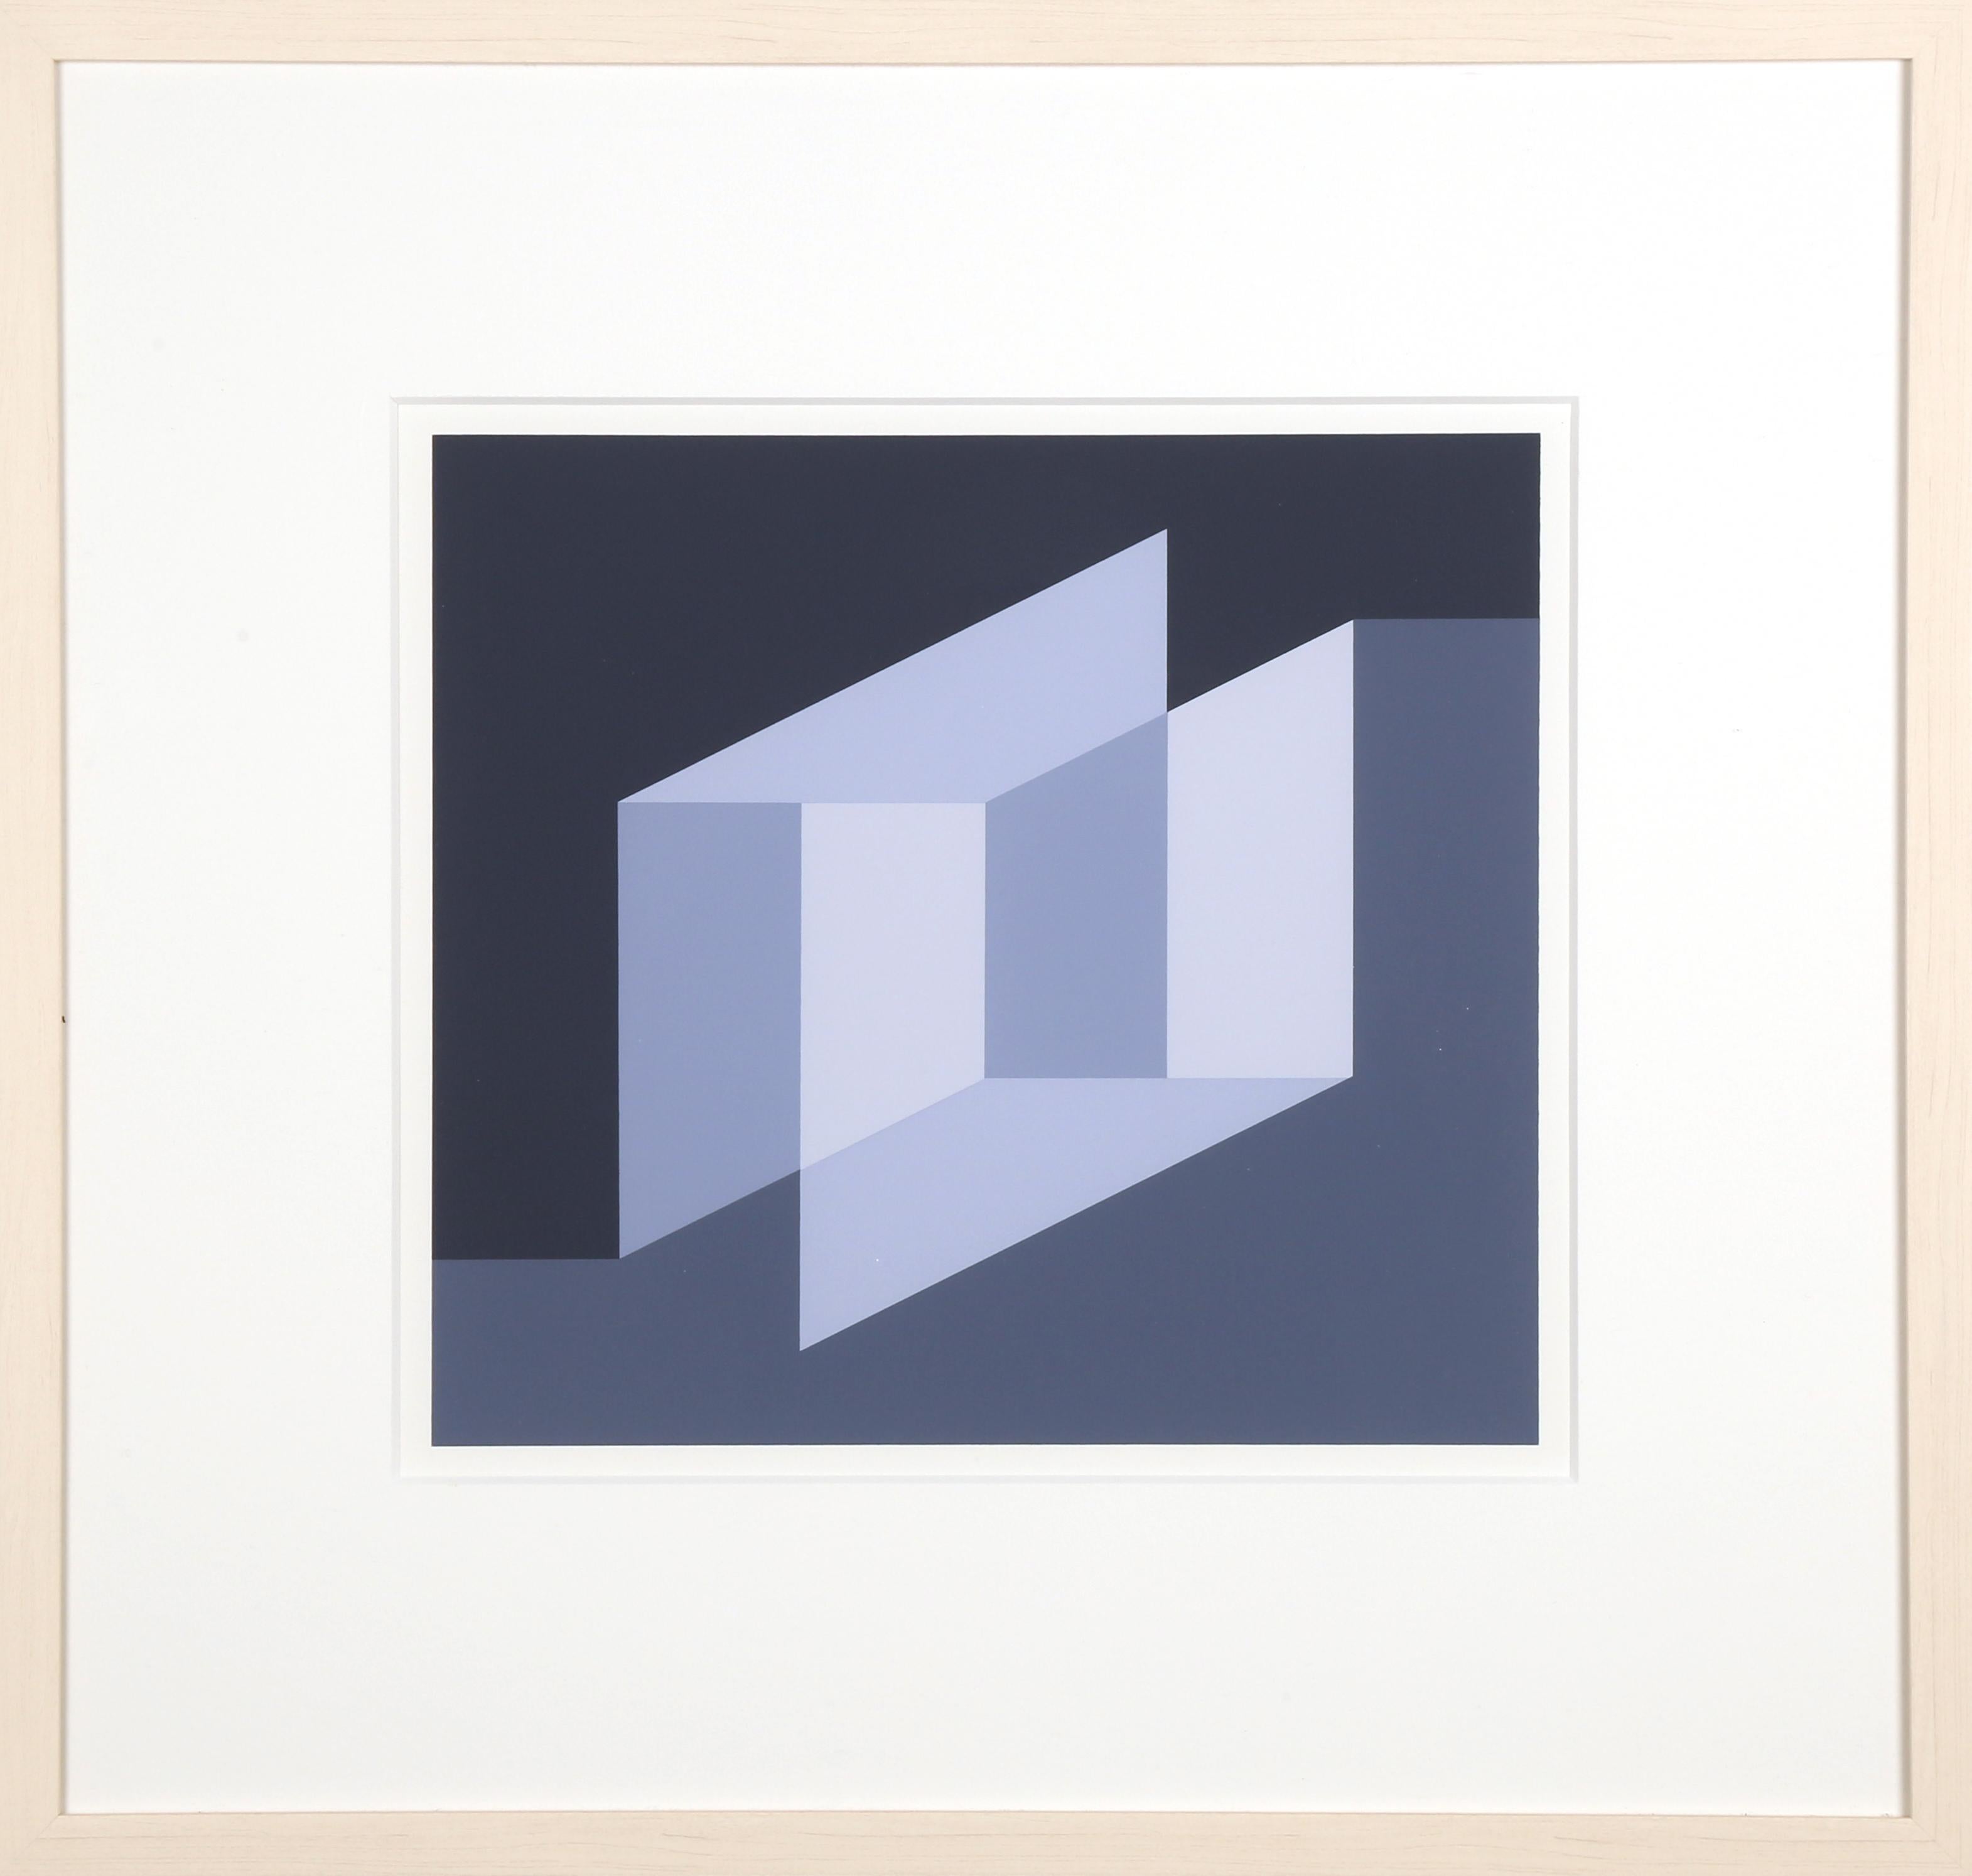 Formulation: Articulation, Portfolio II, Folder 25 - Abstract Geometric Print by Josef Albers